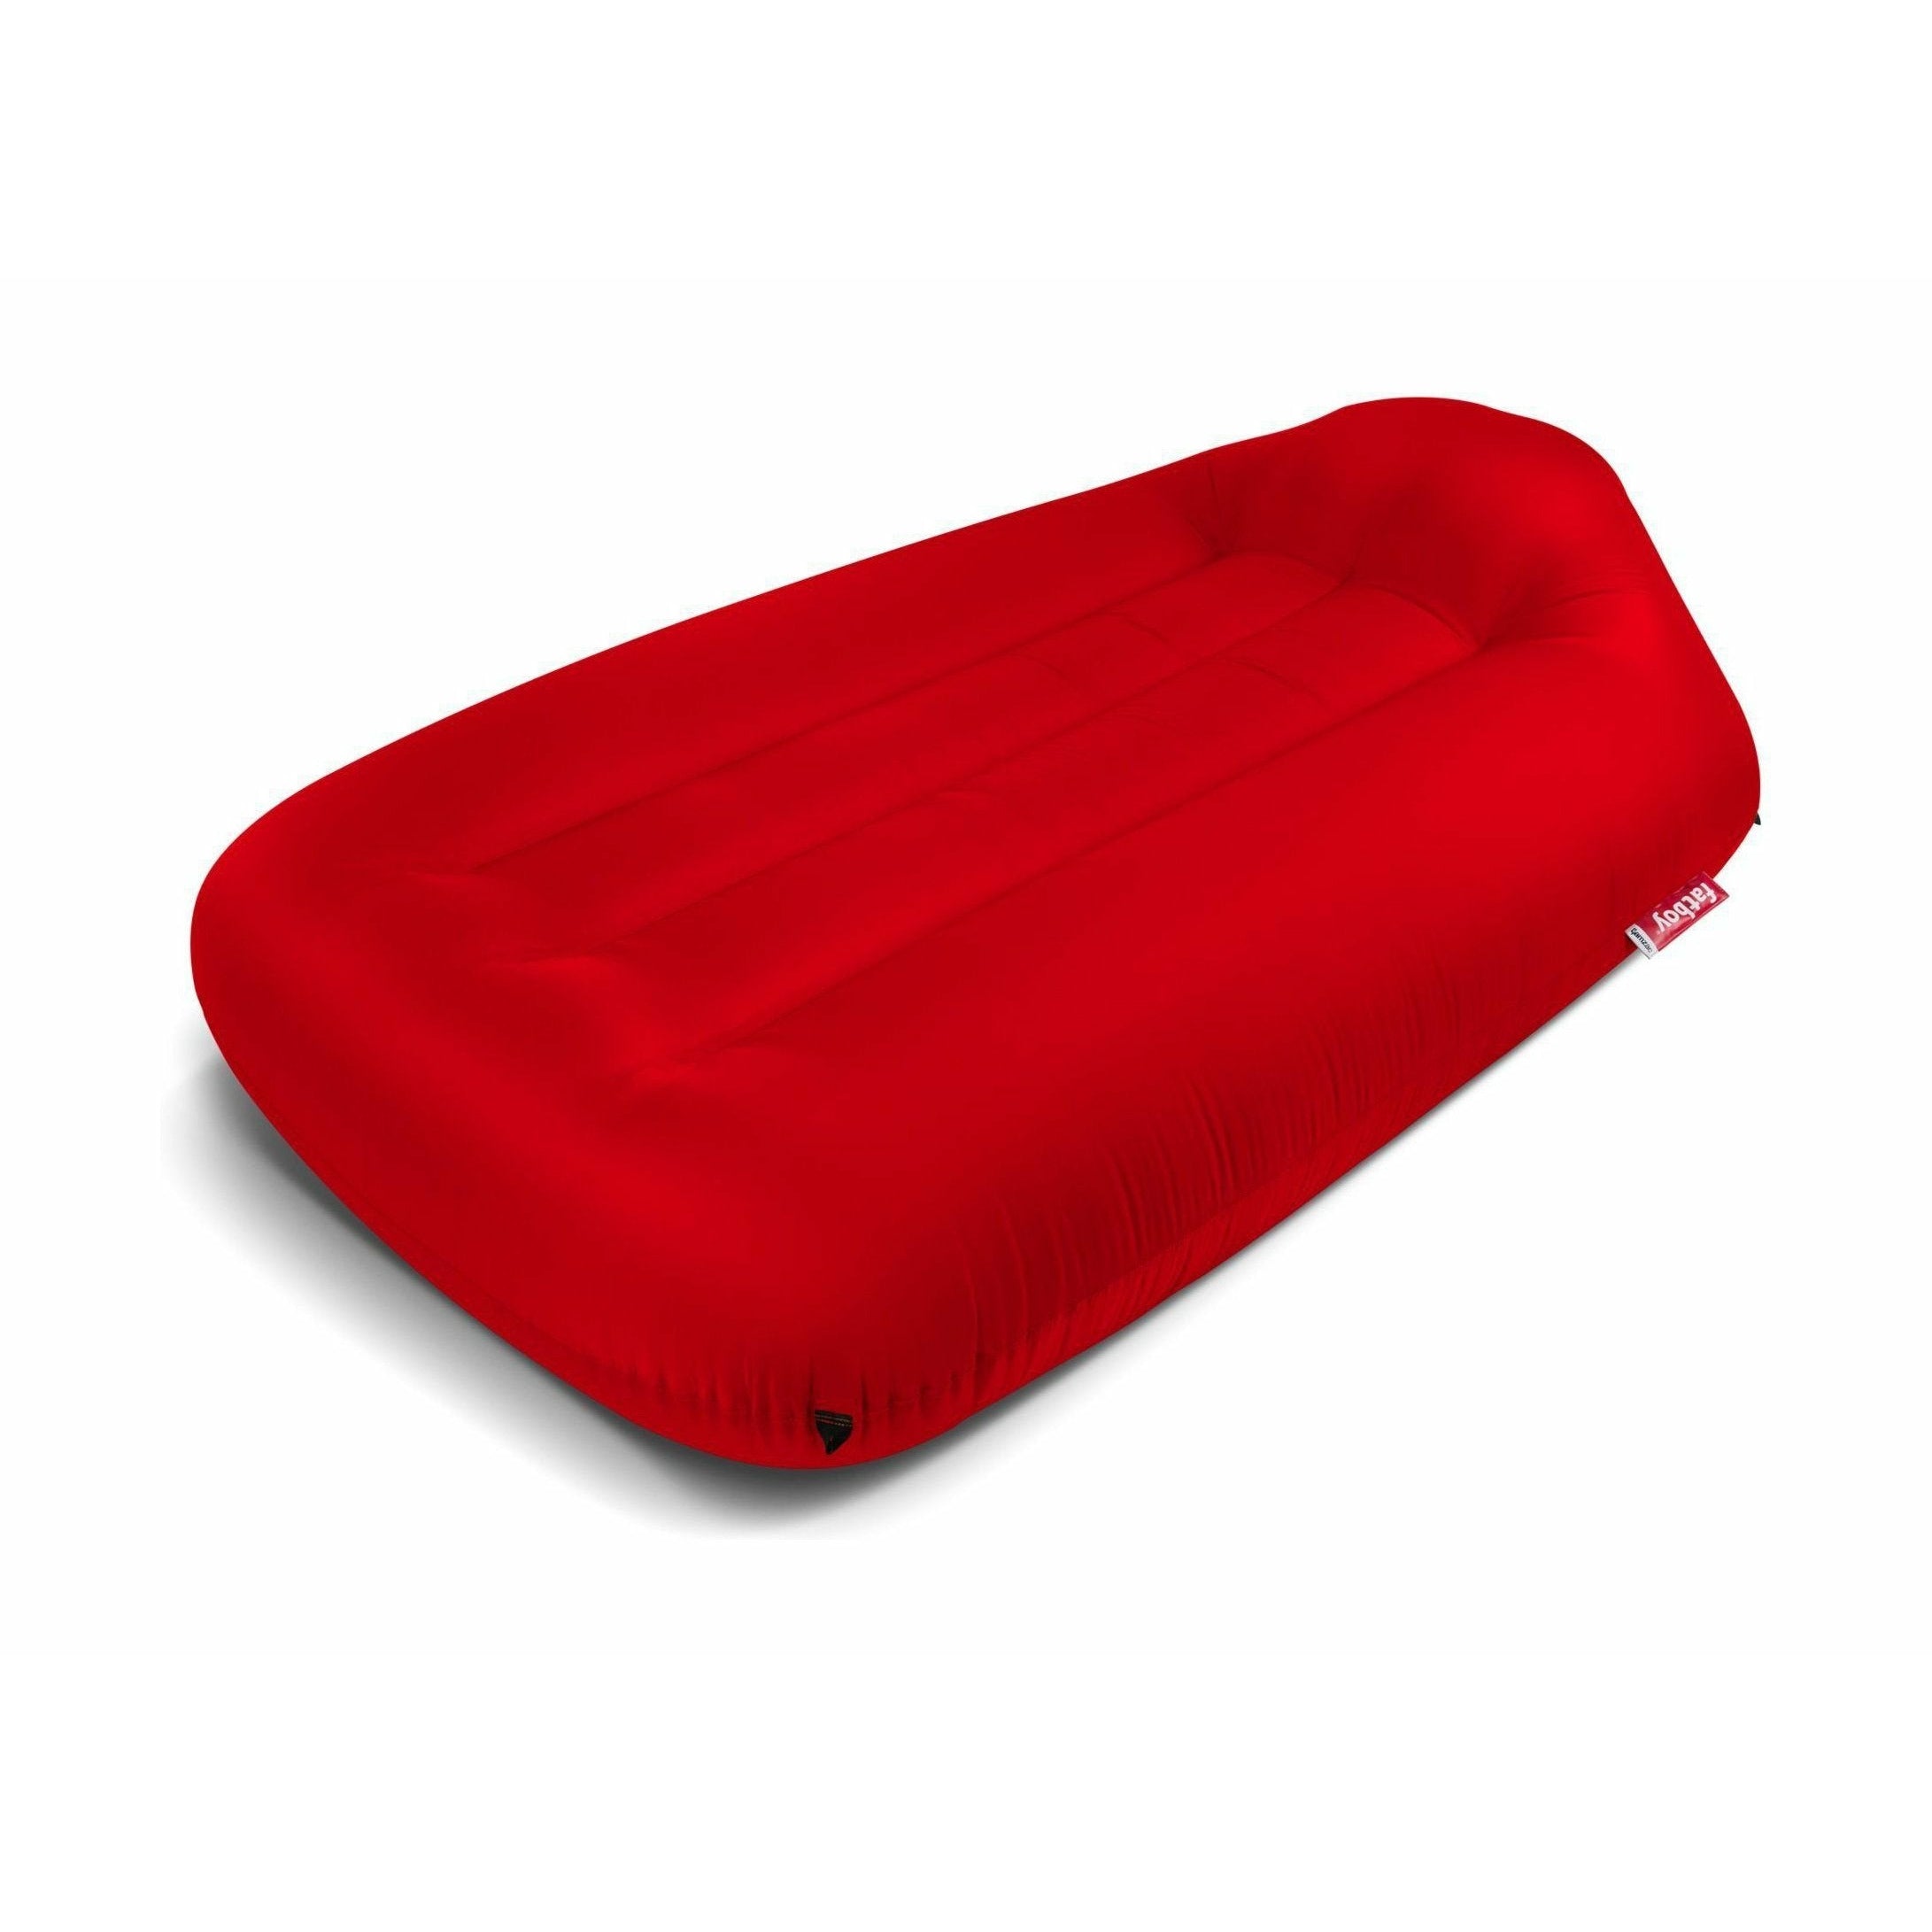 Fatboy Lamzac L Inflatable Air Sofa 3.0, Red